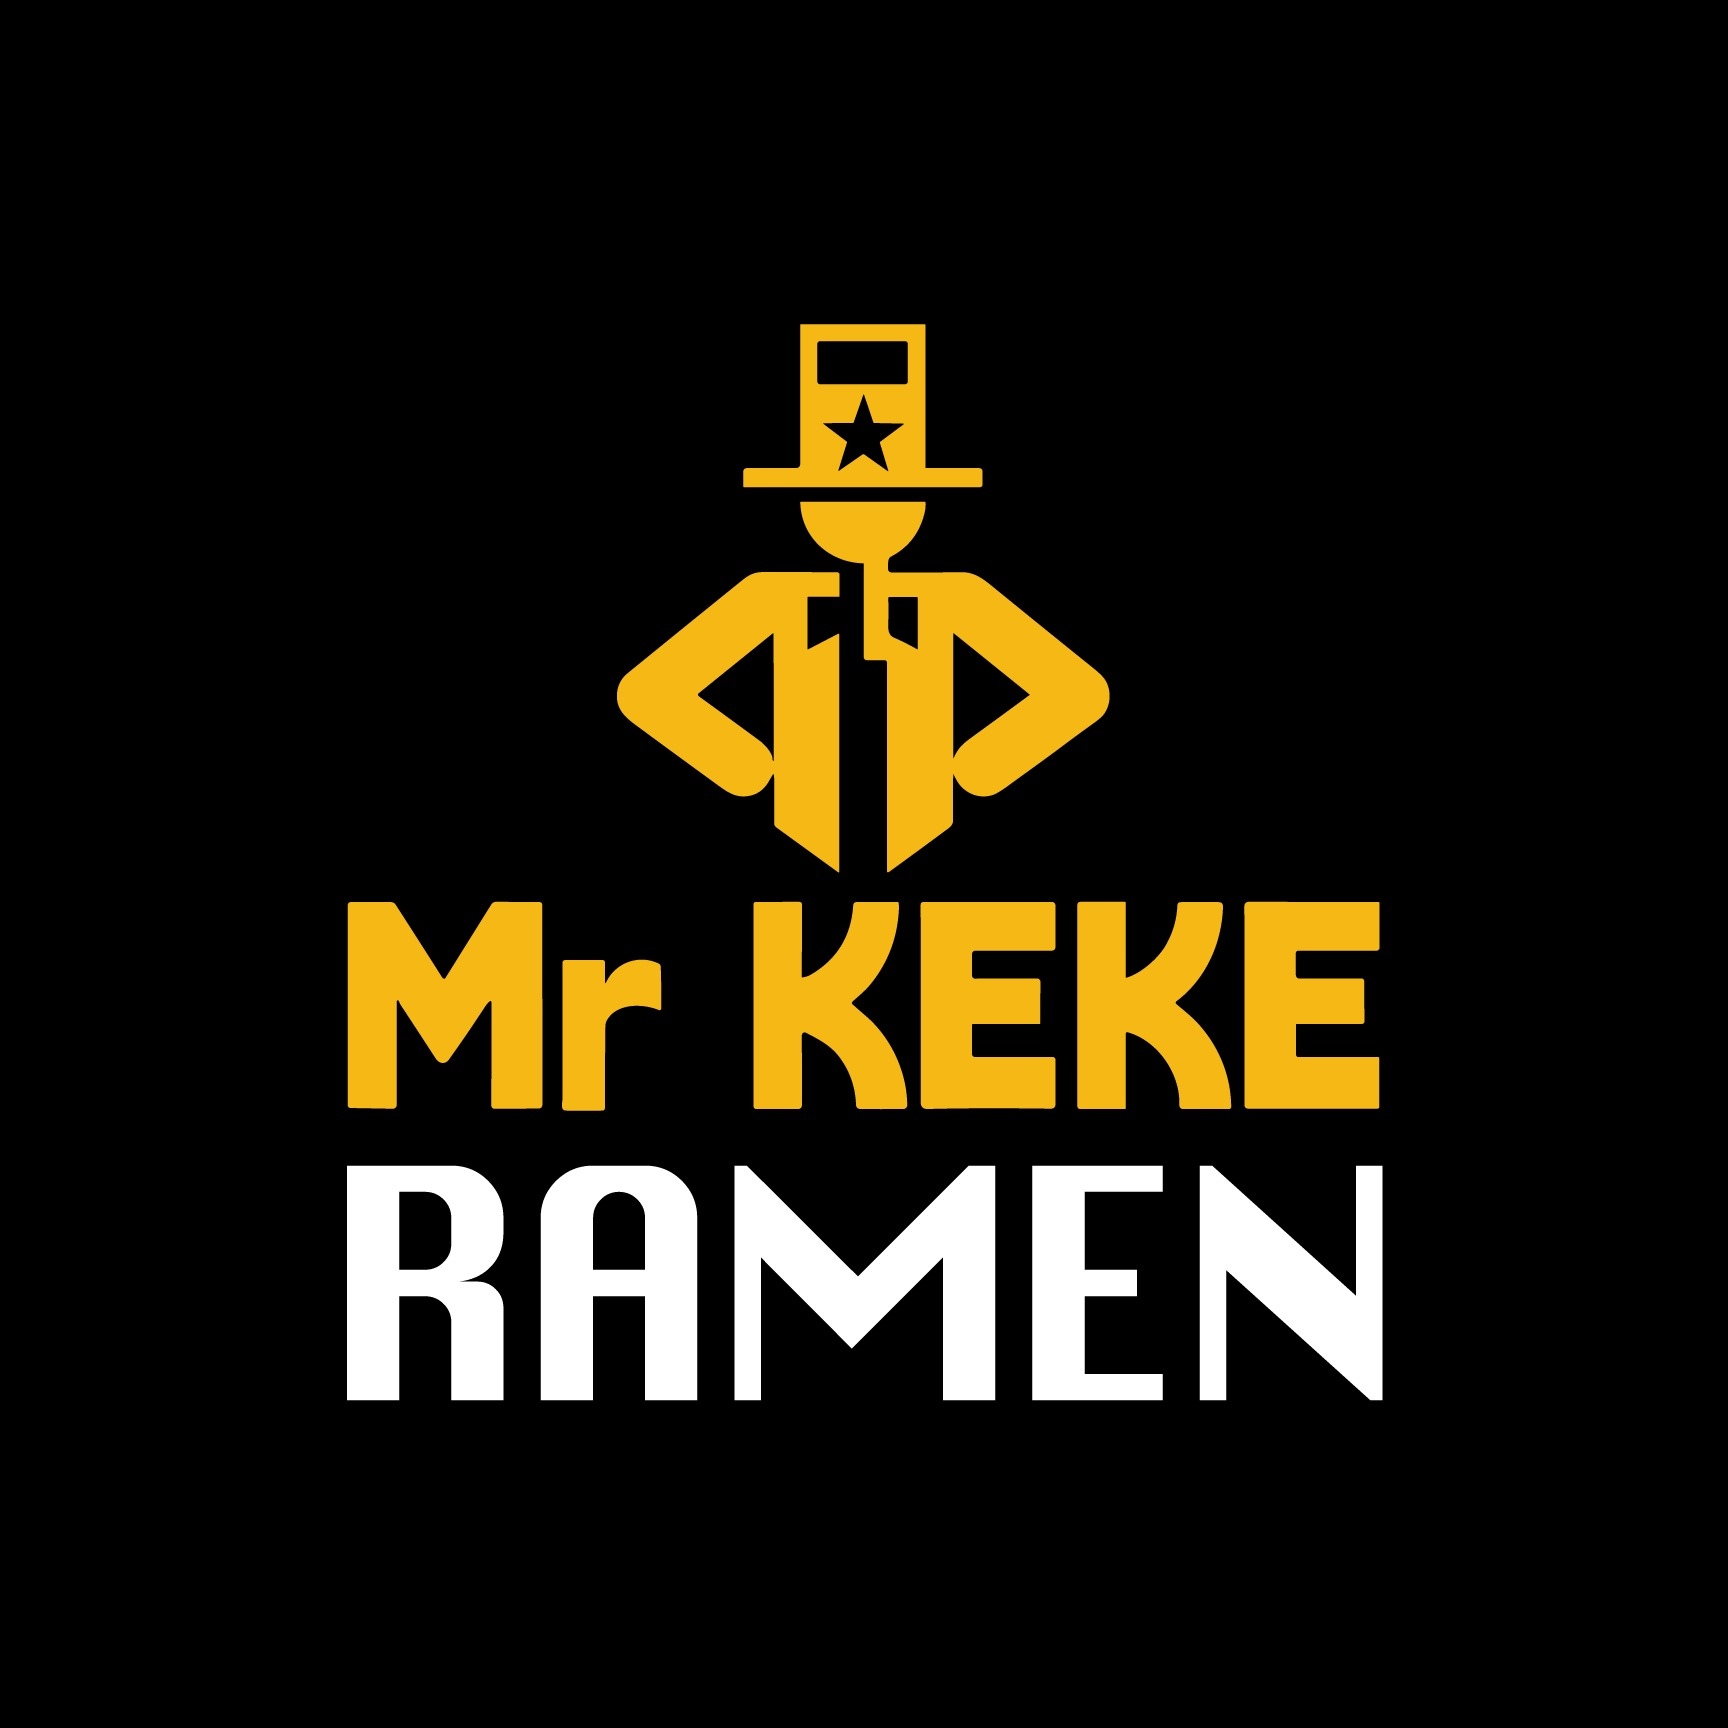 Mr KEKE Ramen